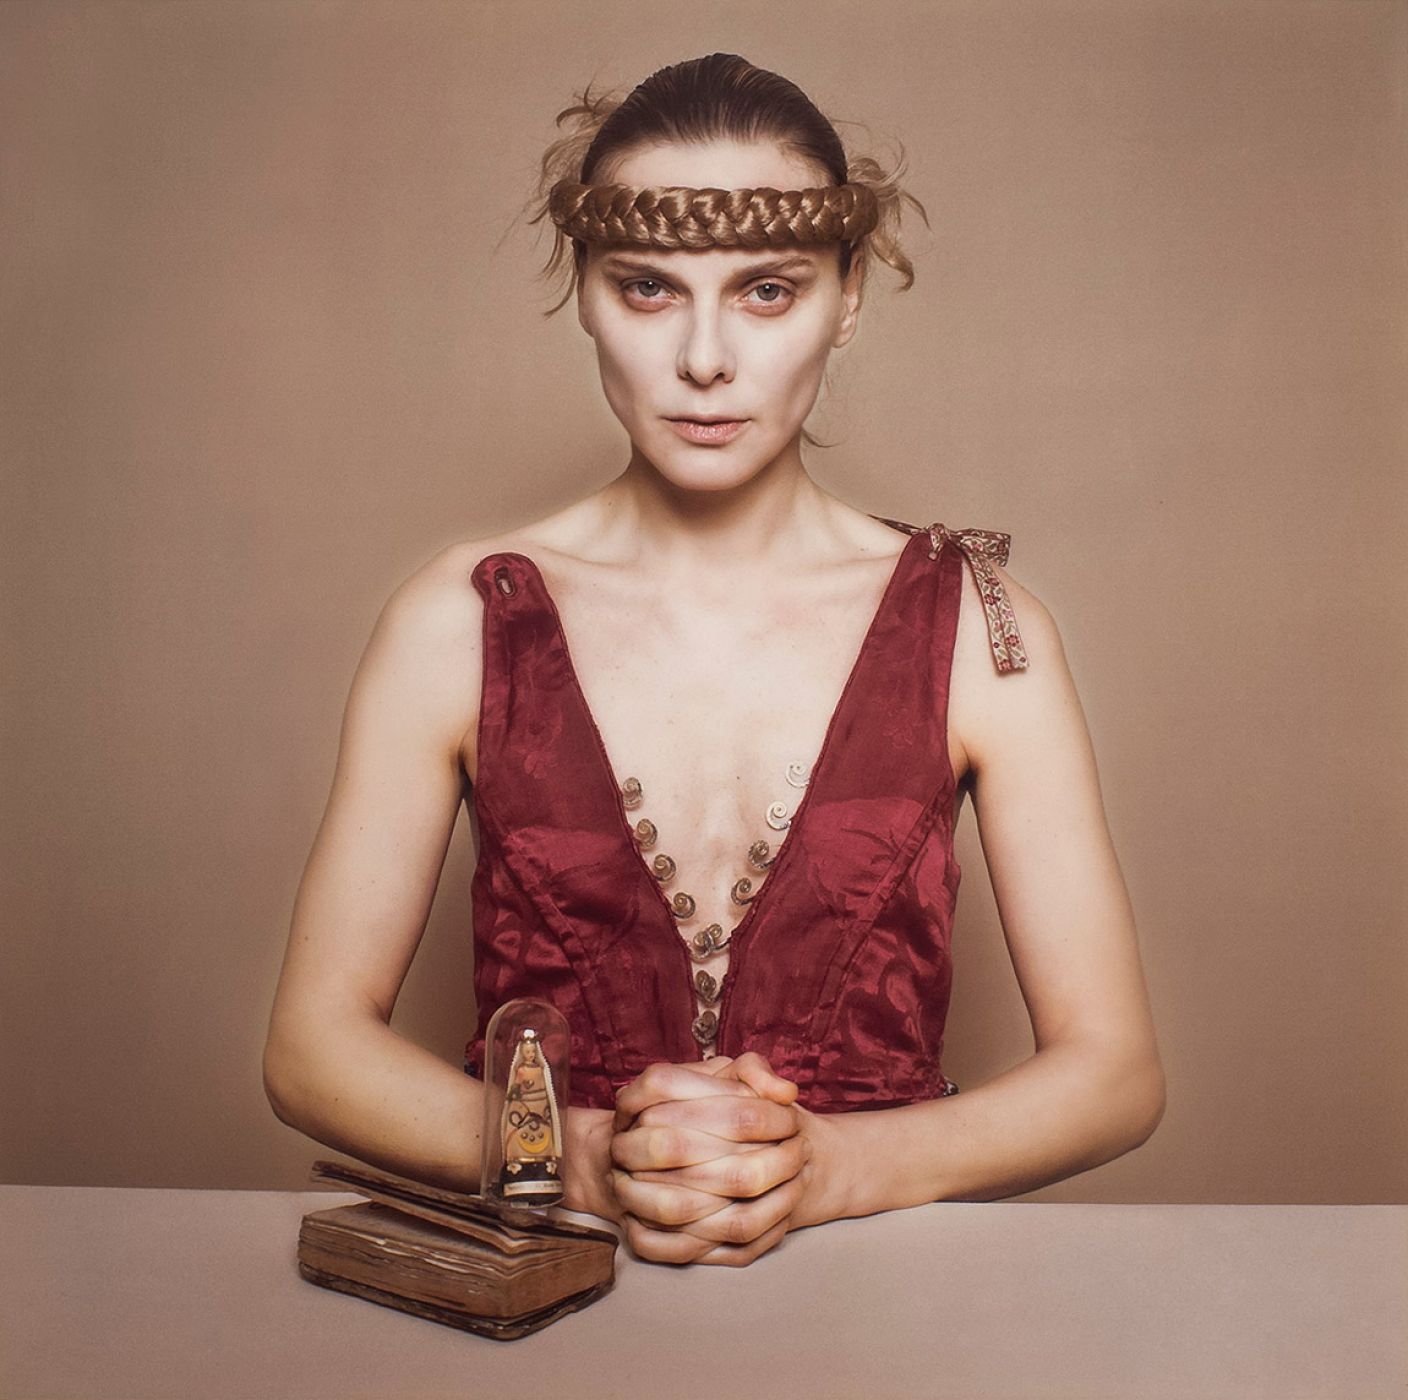 Brigitte Niedermair, “Senza titolo”, 1997